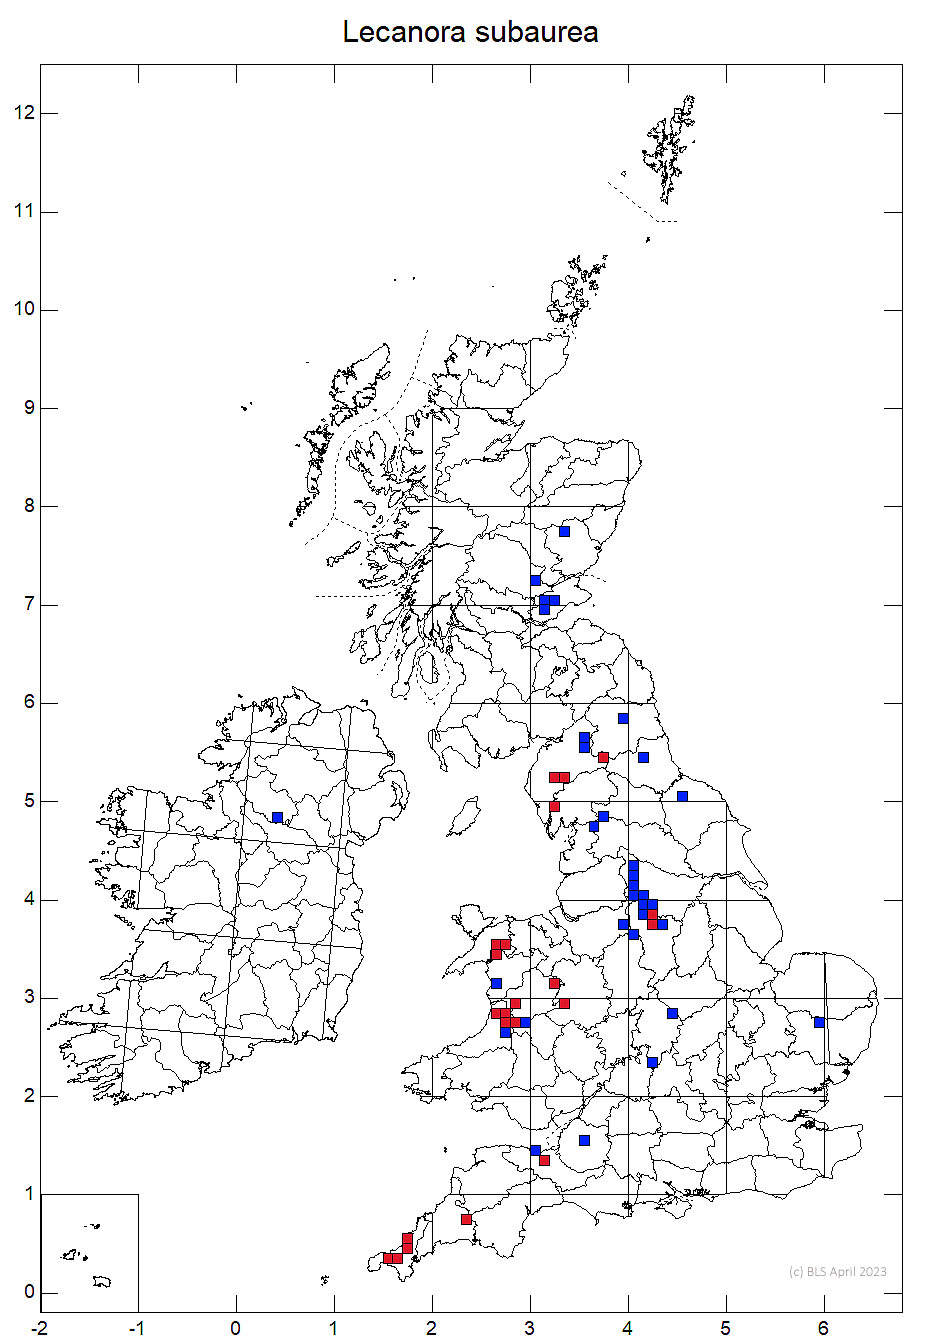 Lecanora subaurea 10km sq distribution map